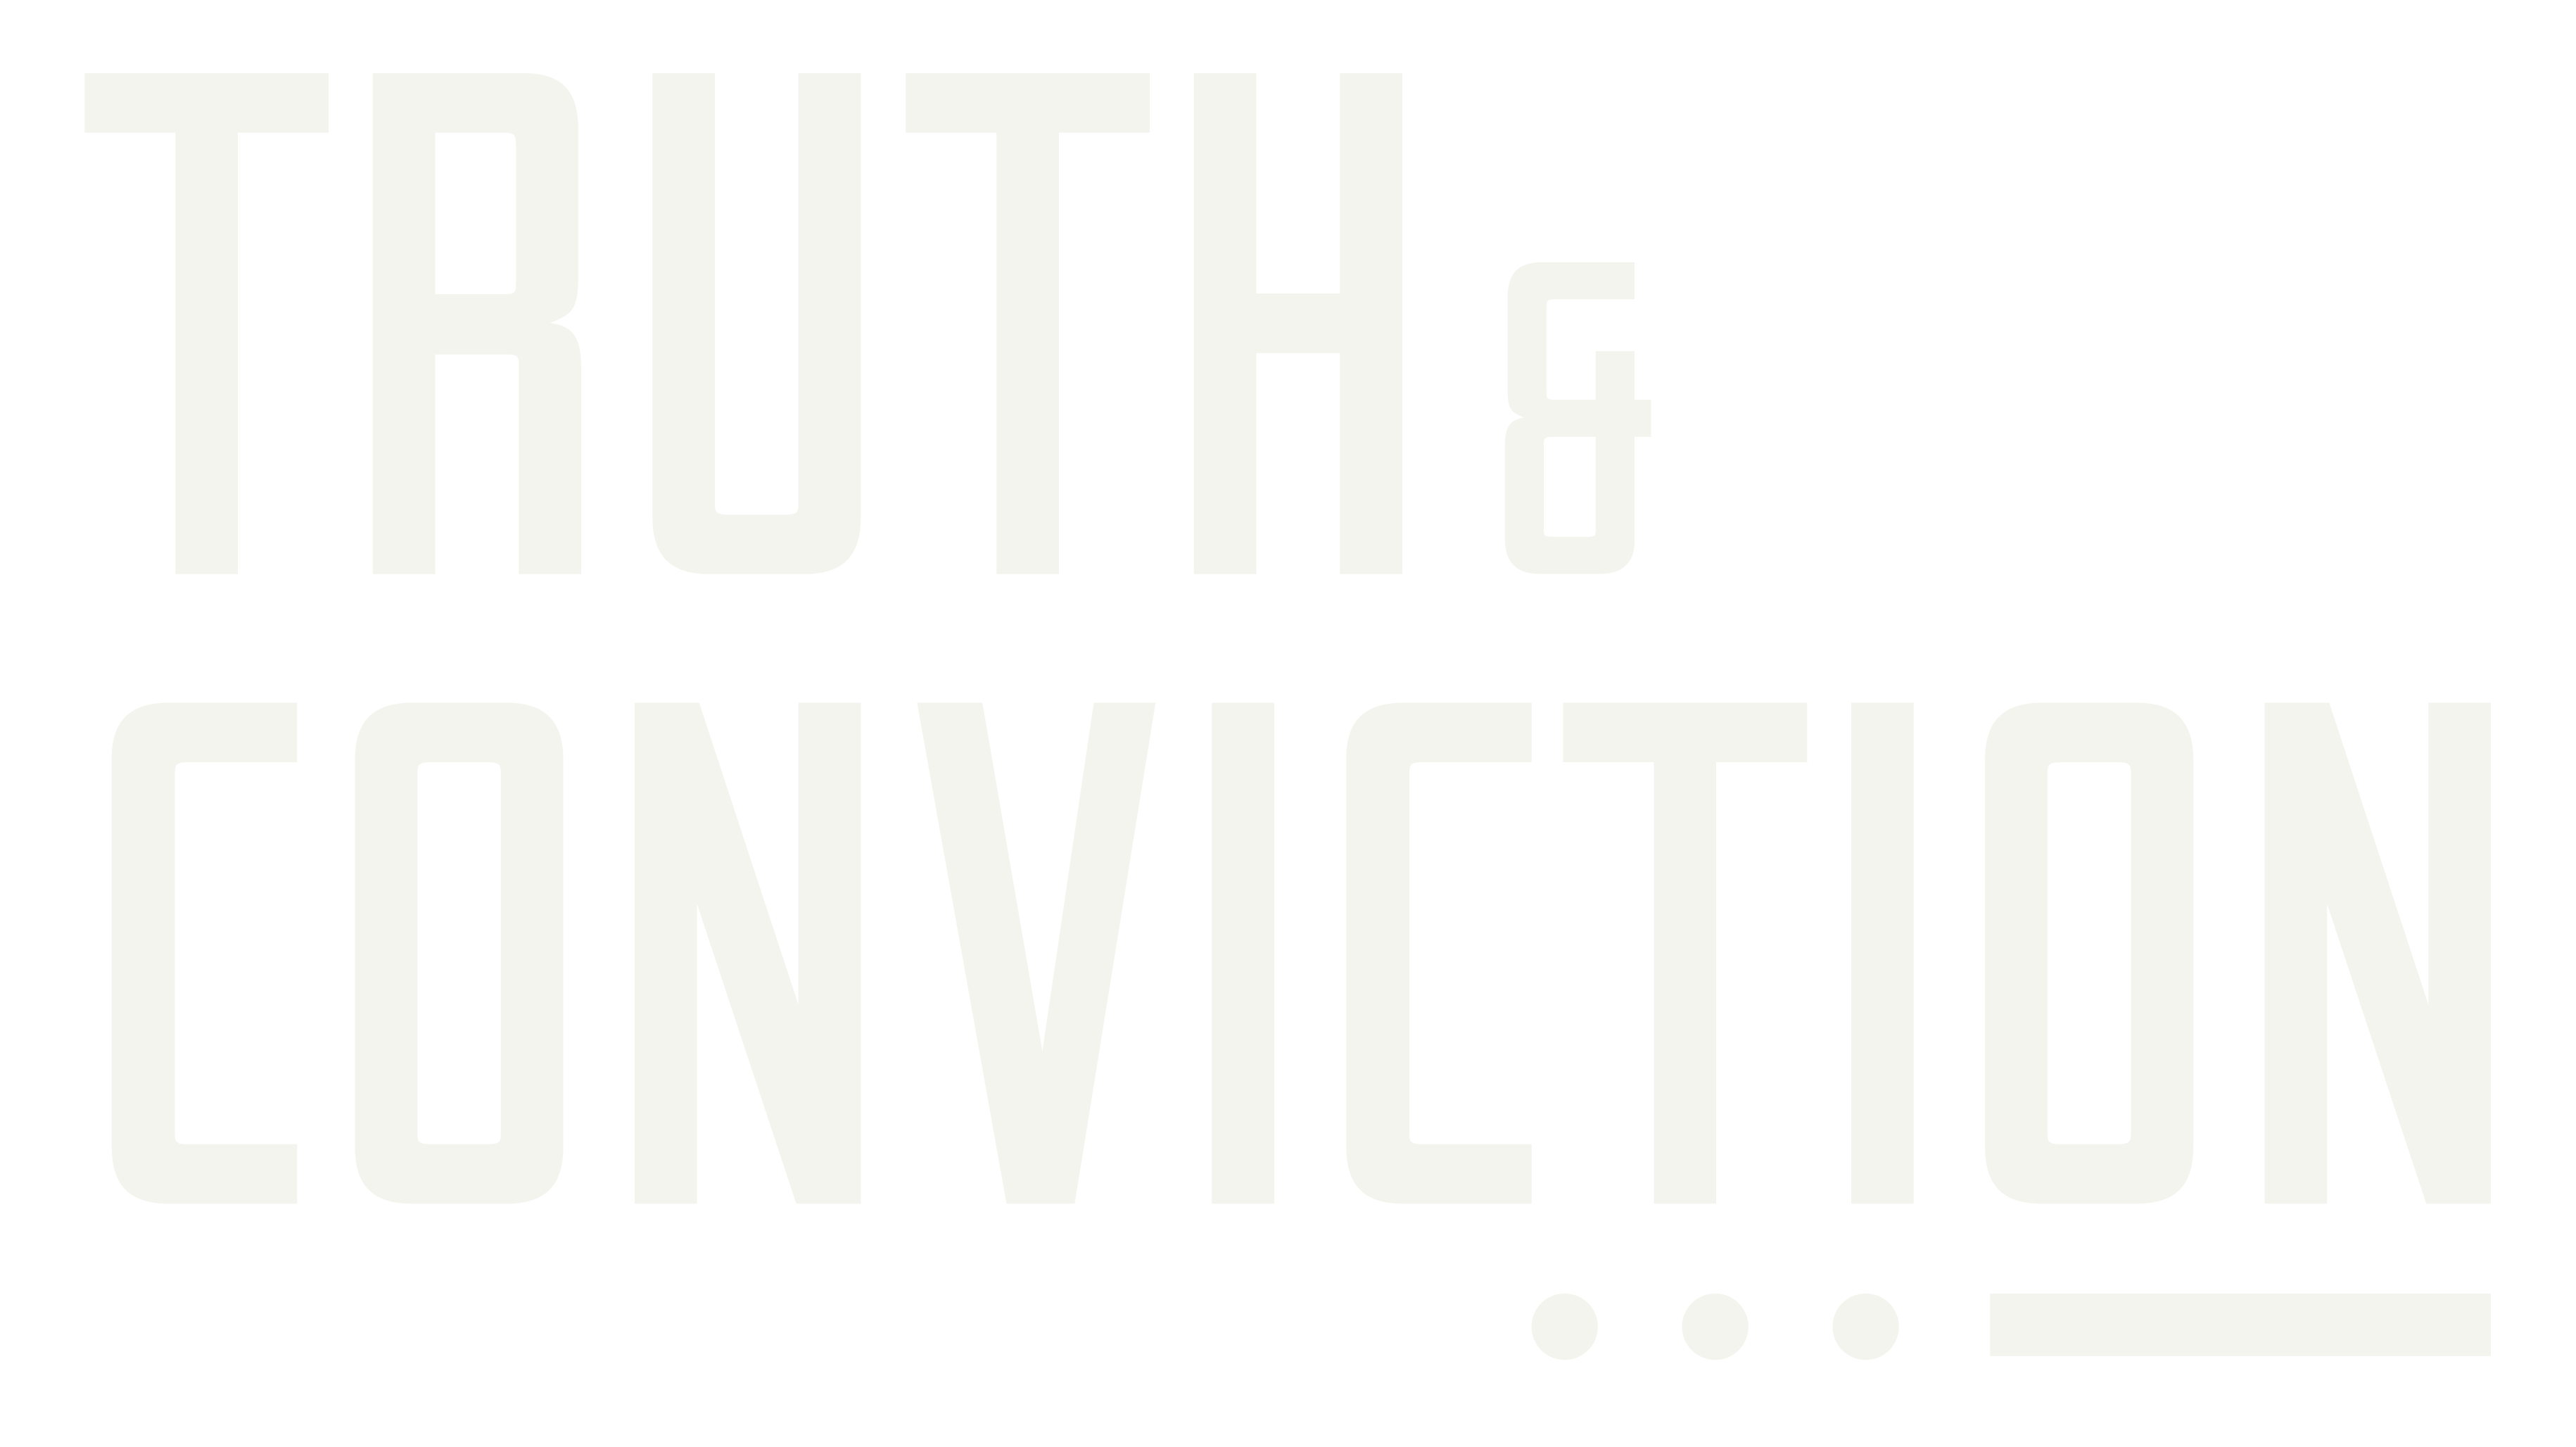 Truth & Conviction